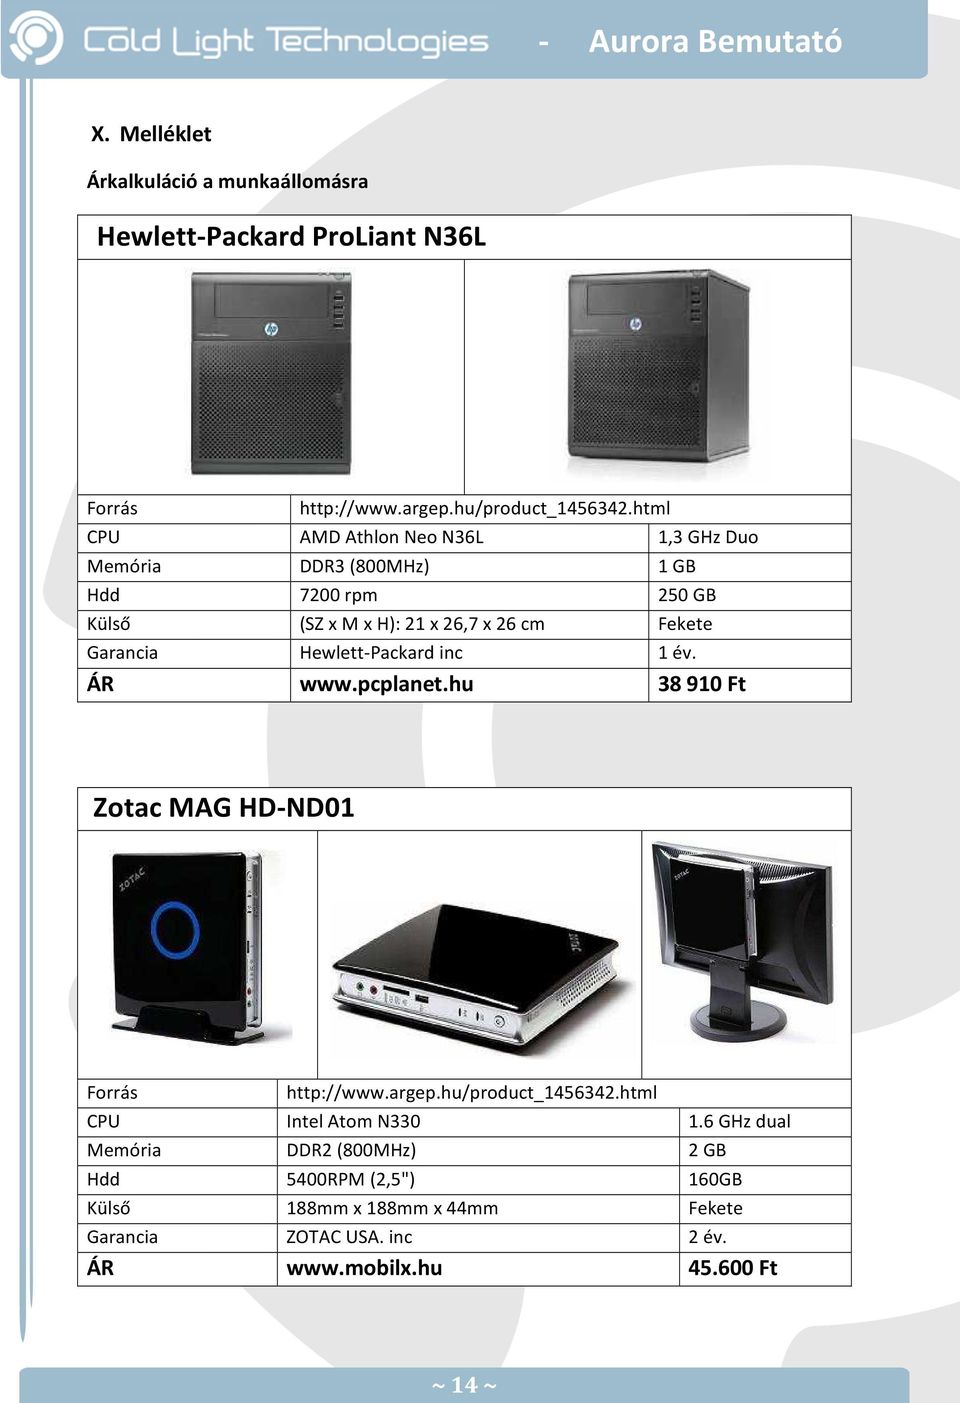 Garancia Hewlett-Packard inc 1 év. ÁR www.pcplanet.hu 38 910 Ft Zotac MAG HD-ND01 Forrás http://www.argep.hu/product_1456342.